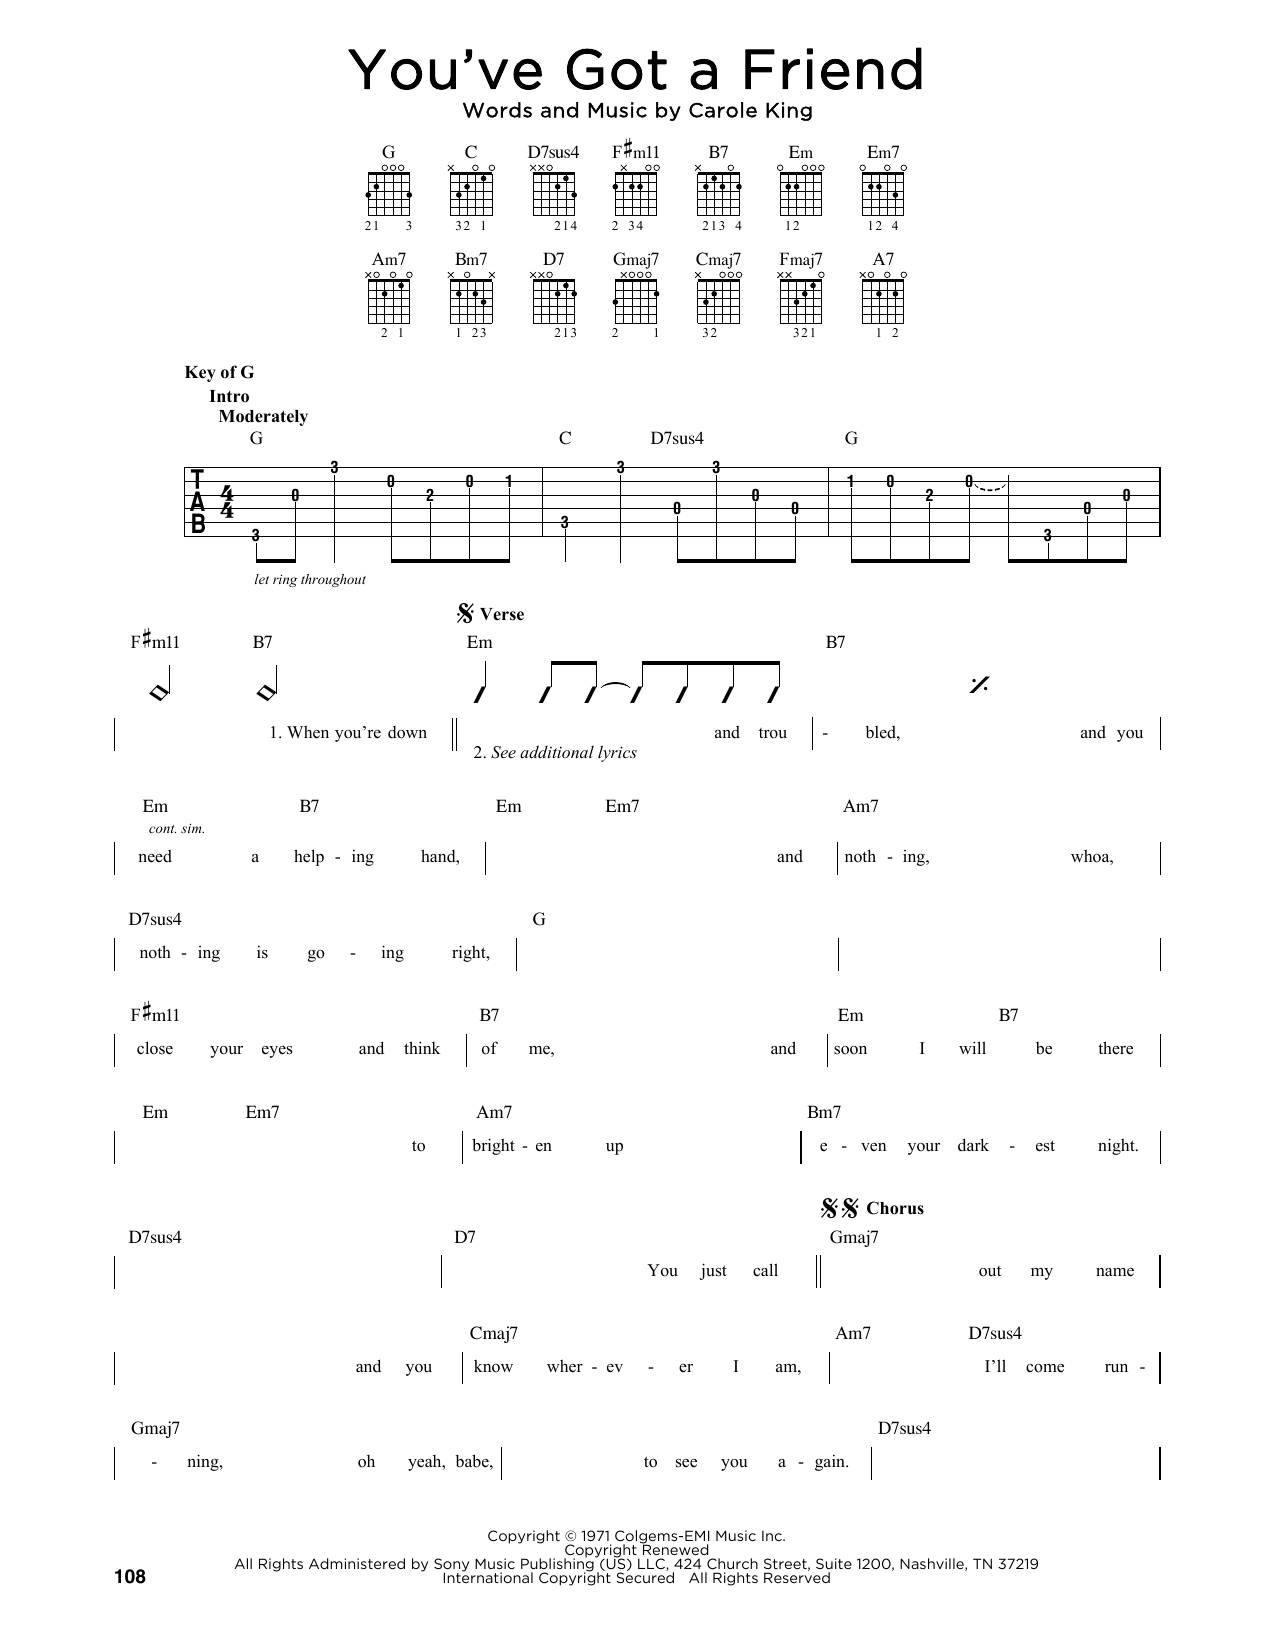 James Taylor You've Got A Friend Sheet Music Notes & Chords for Violin - Download or Print PDF